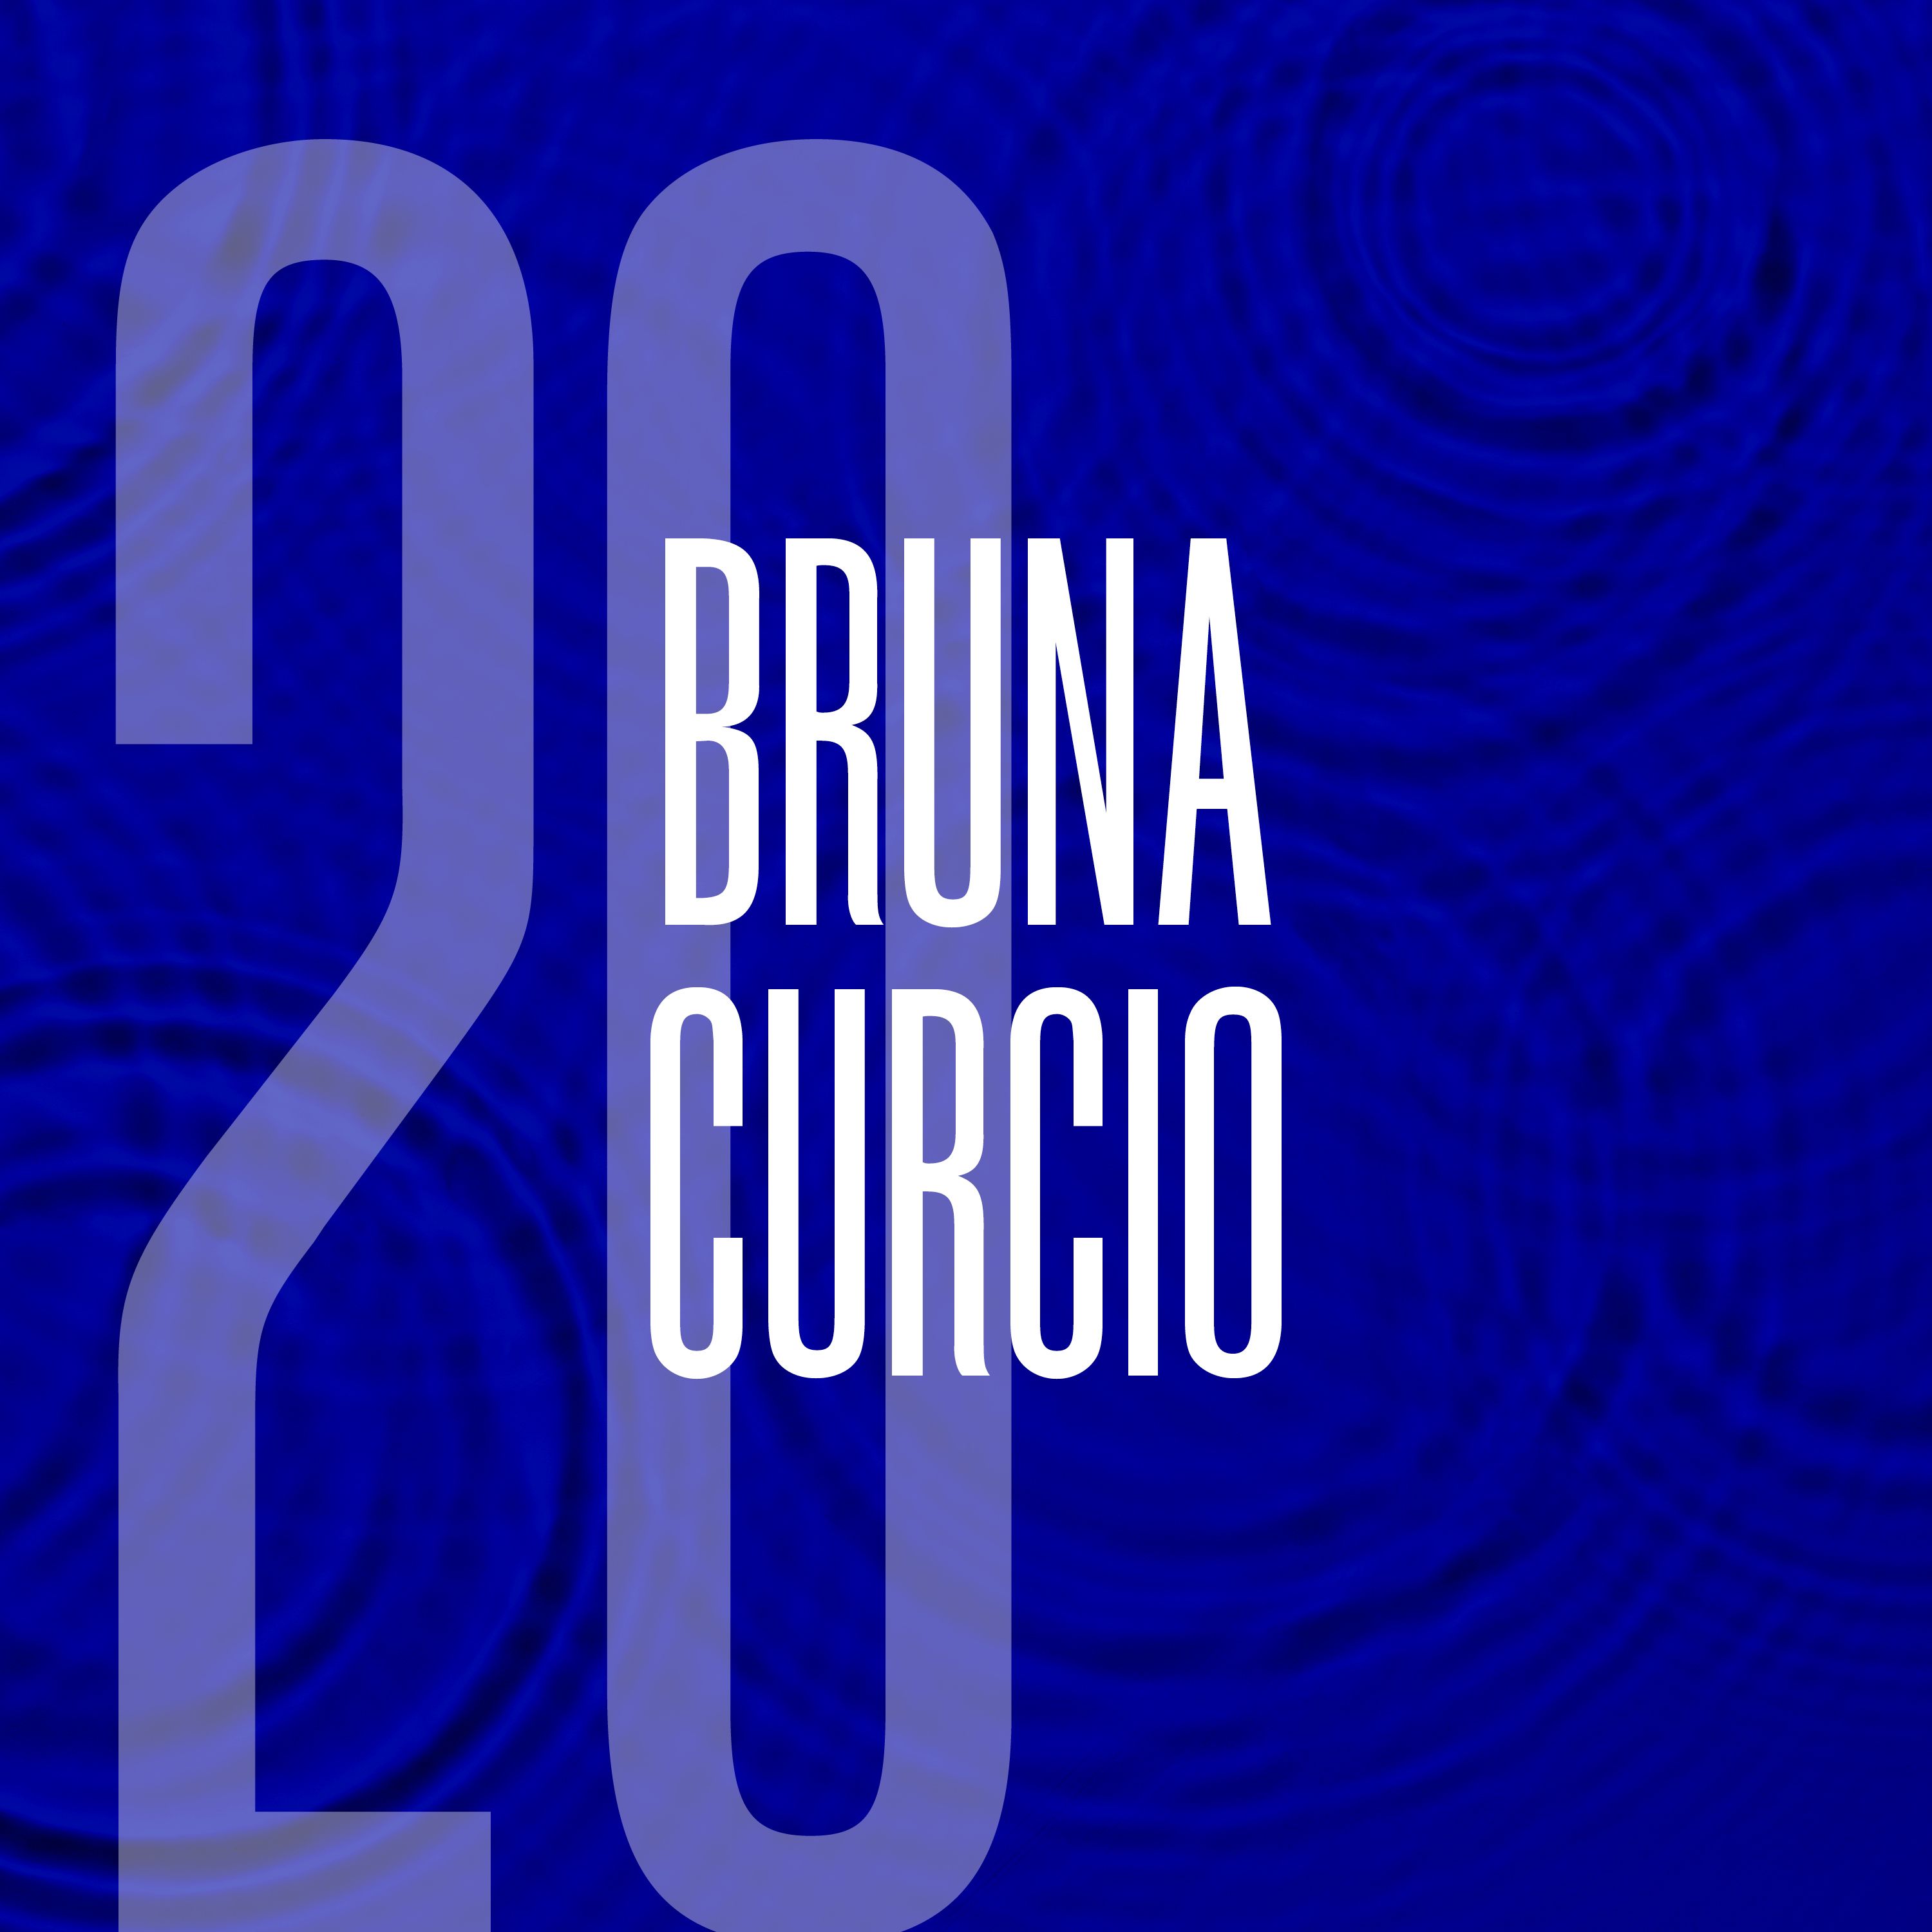 20: Bruna Curcio: Venezuelan Migration Crisis in Brazil